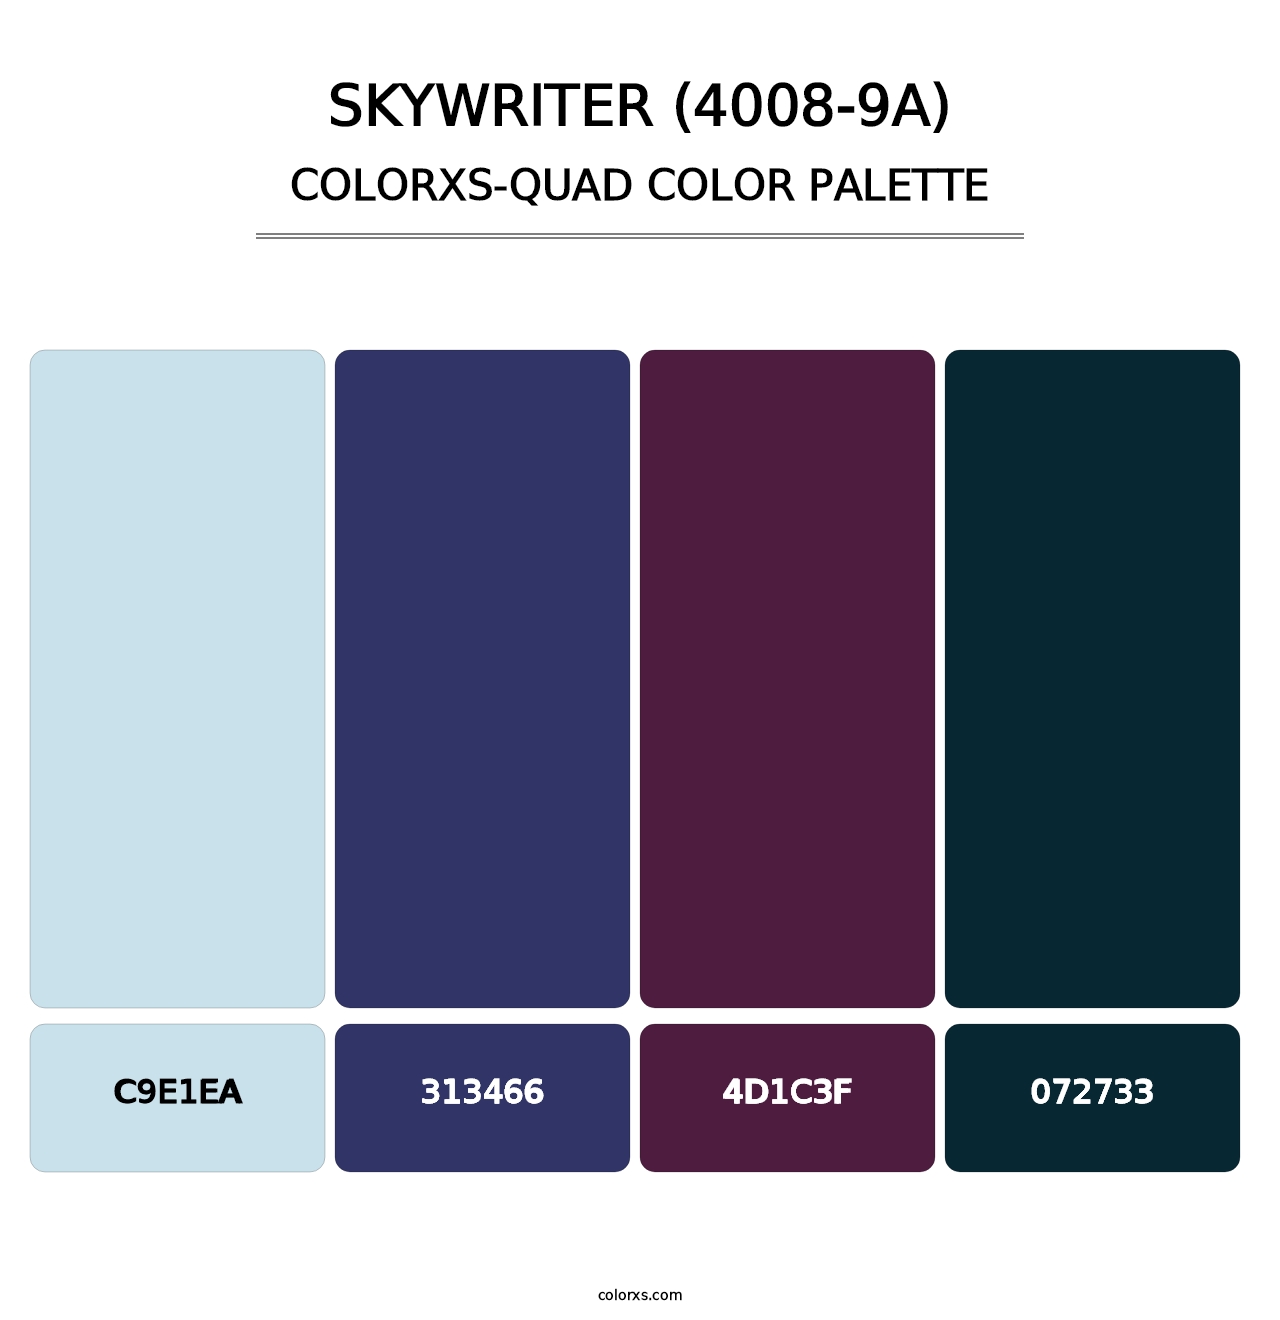 Skywriter (4008-9A) - Colorxs Quad Palette